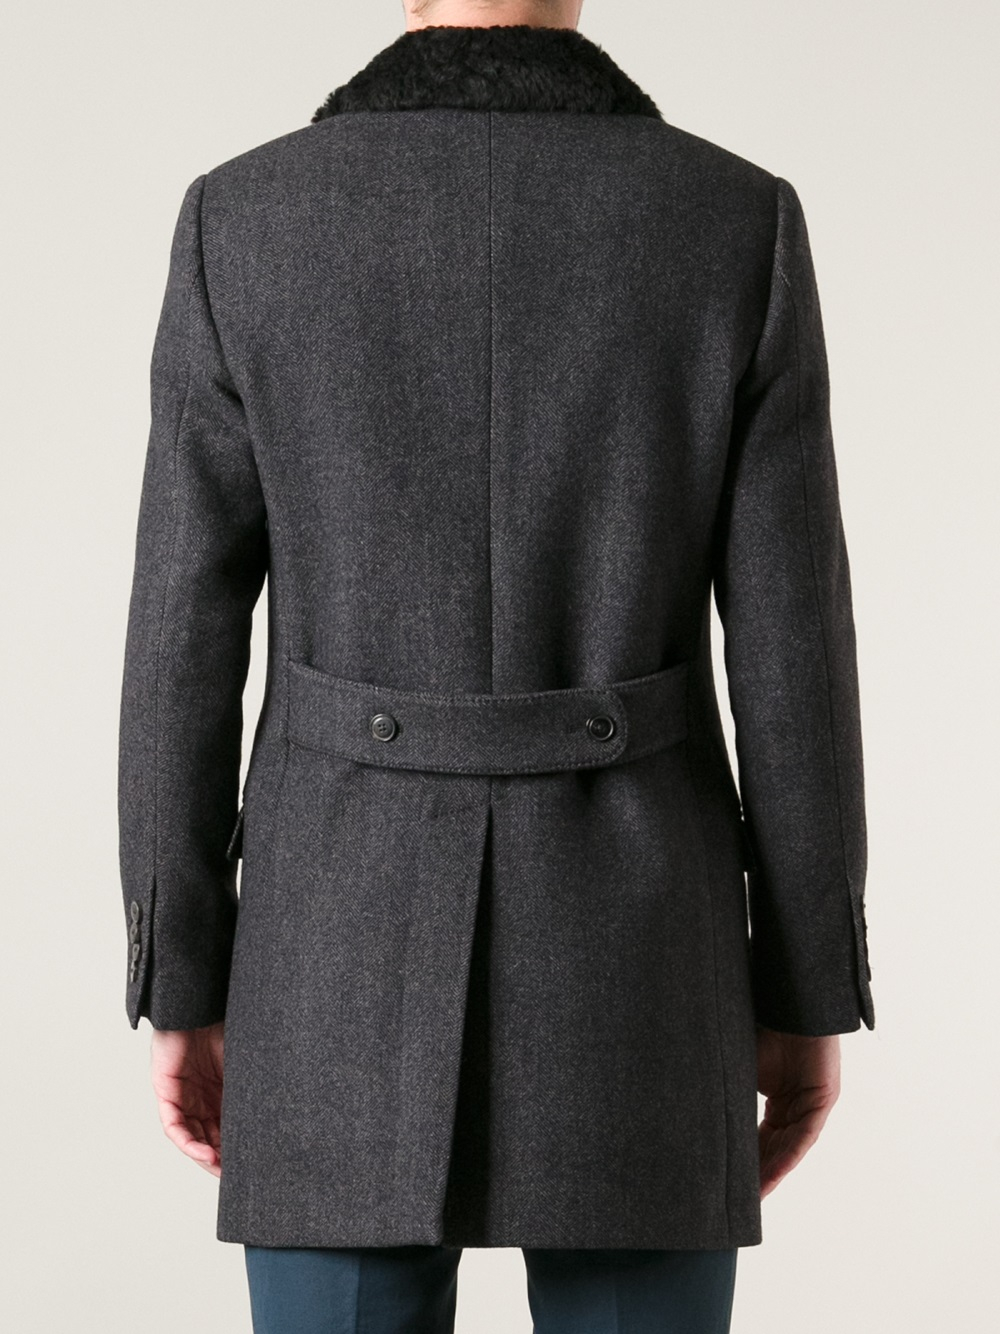 Dolce & Gabbana Herringbone Overcoat in Grey (Gray) for Men - Lyst